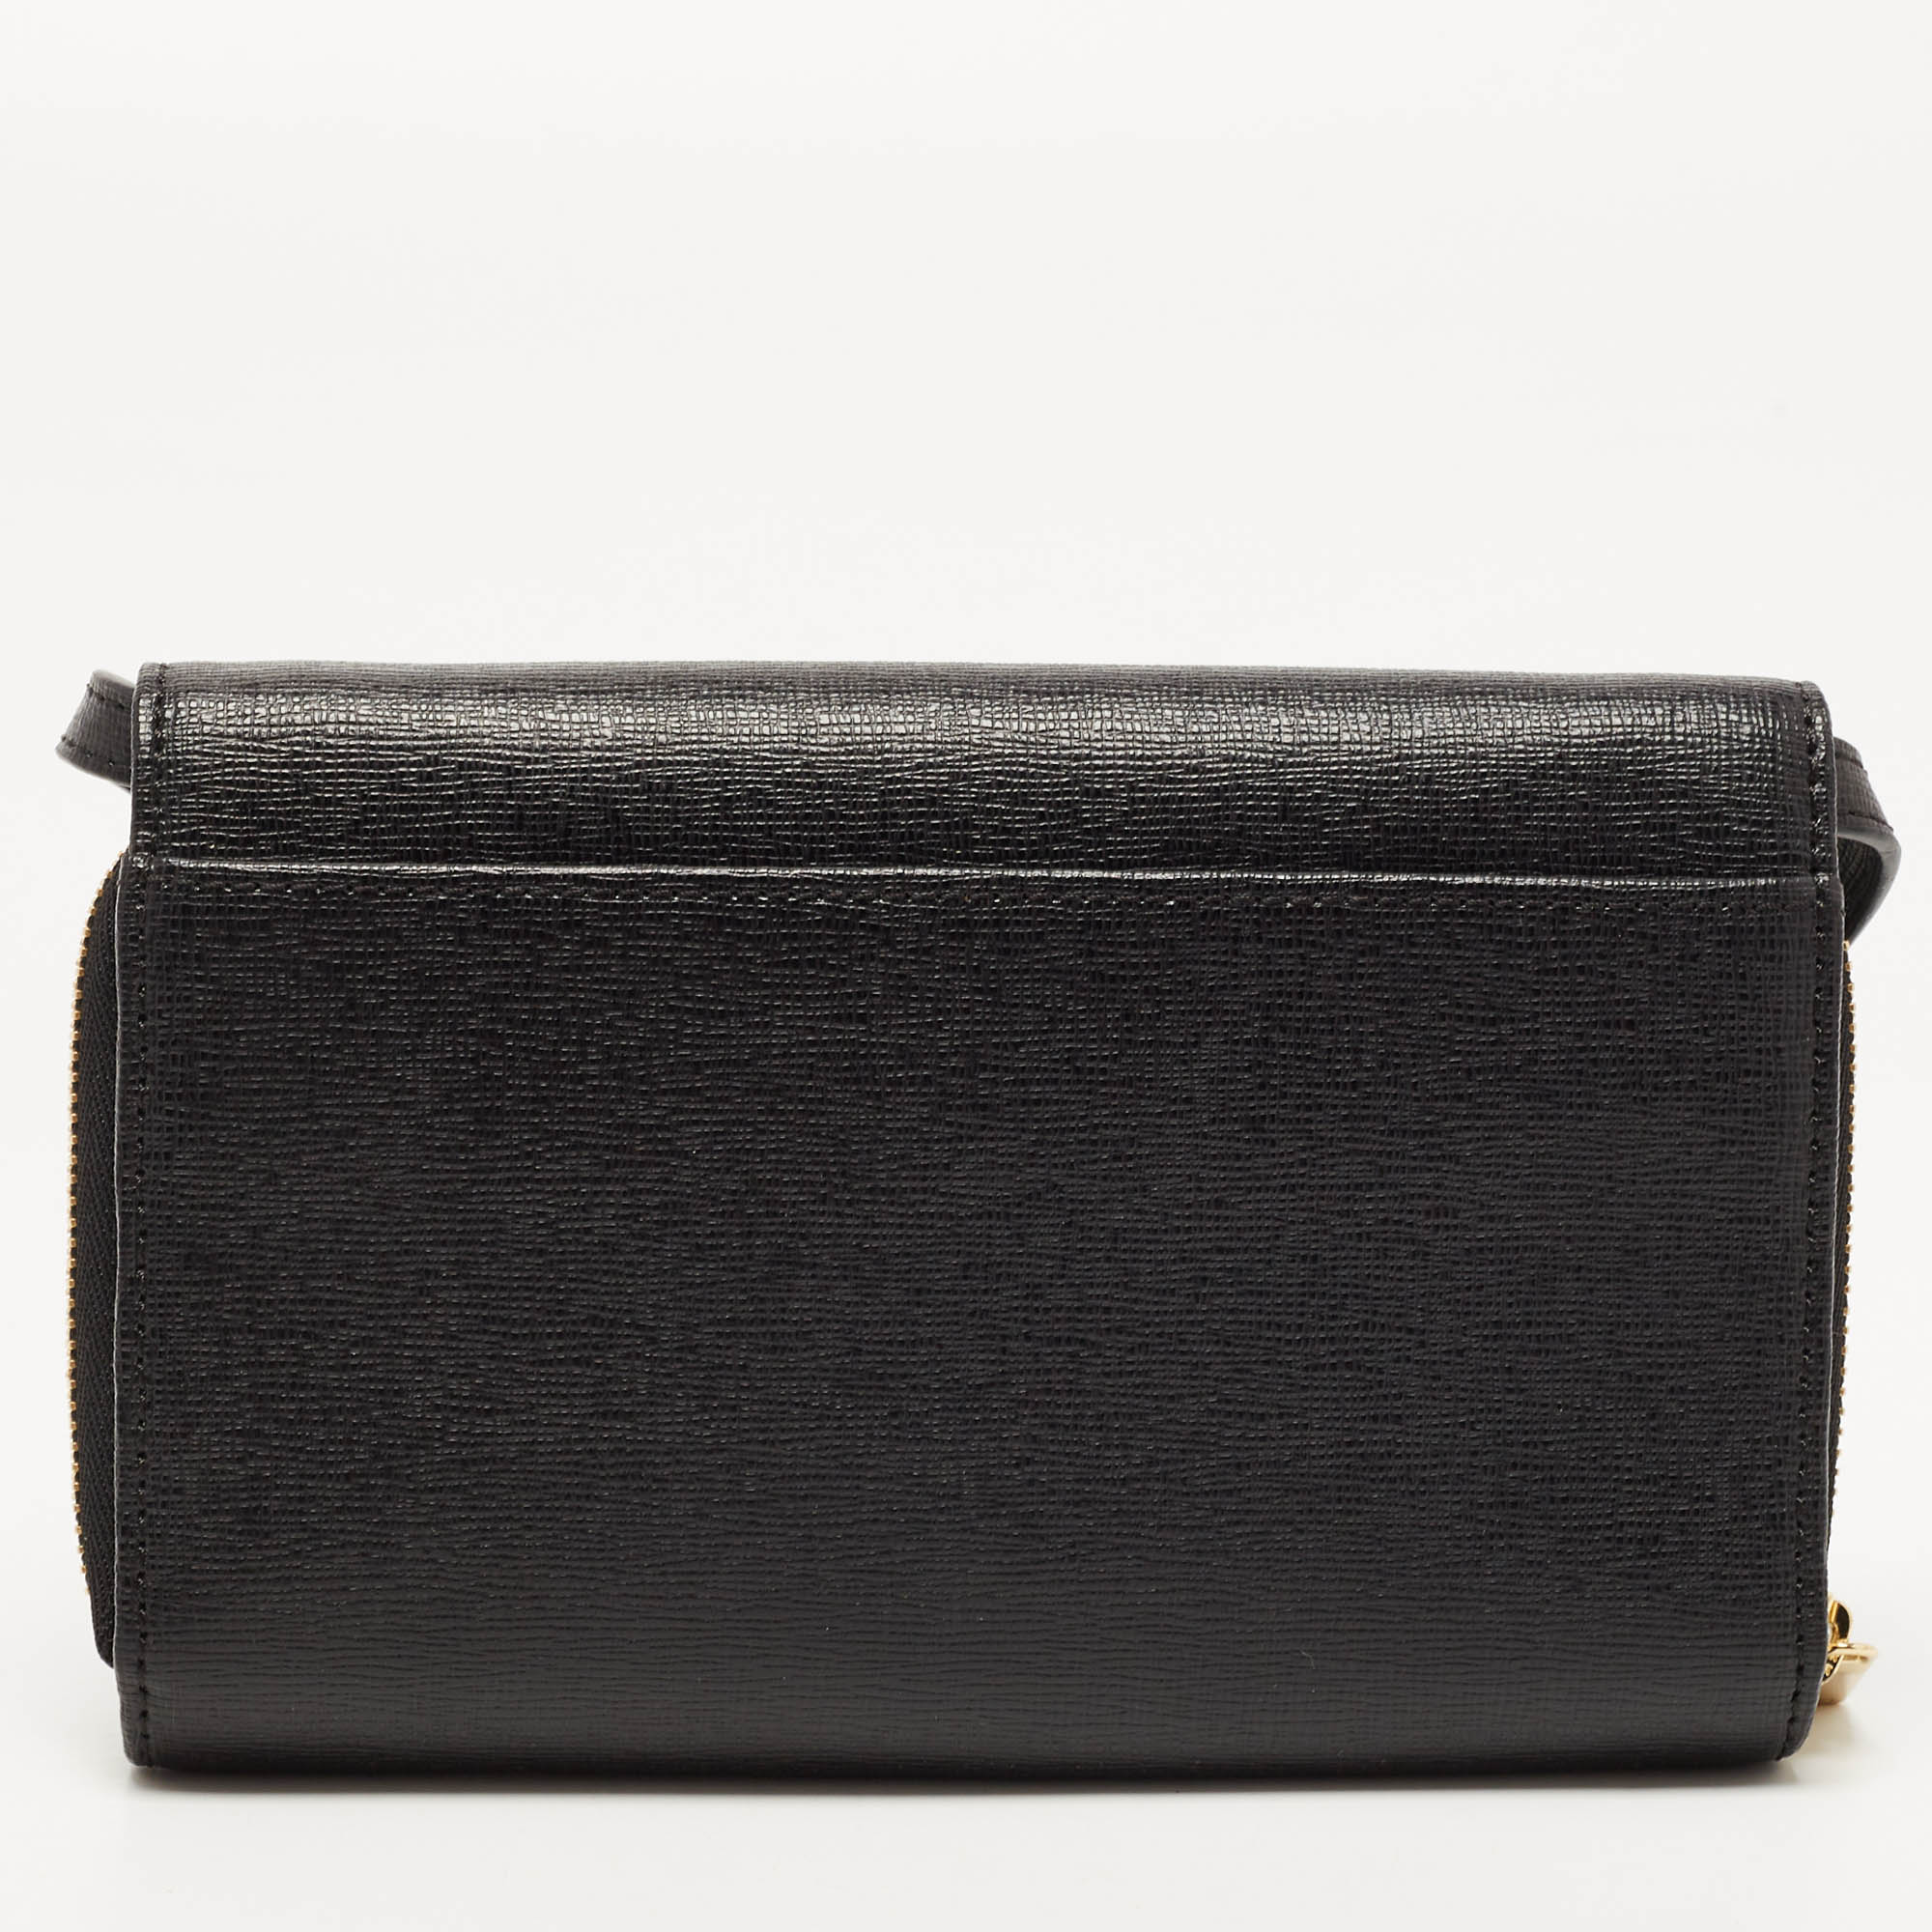 Furla Black Leather Logo Flap Wallet On Strap